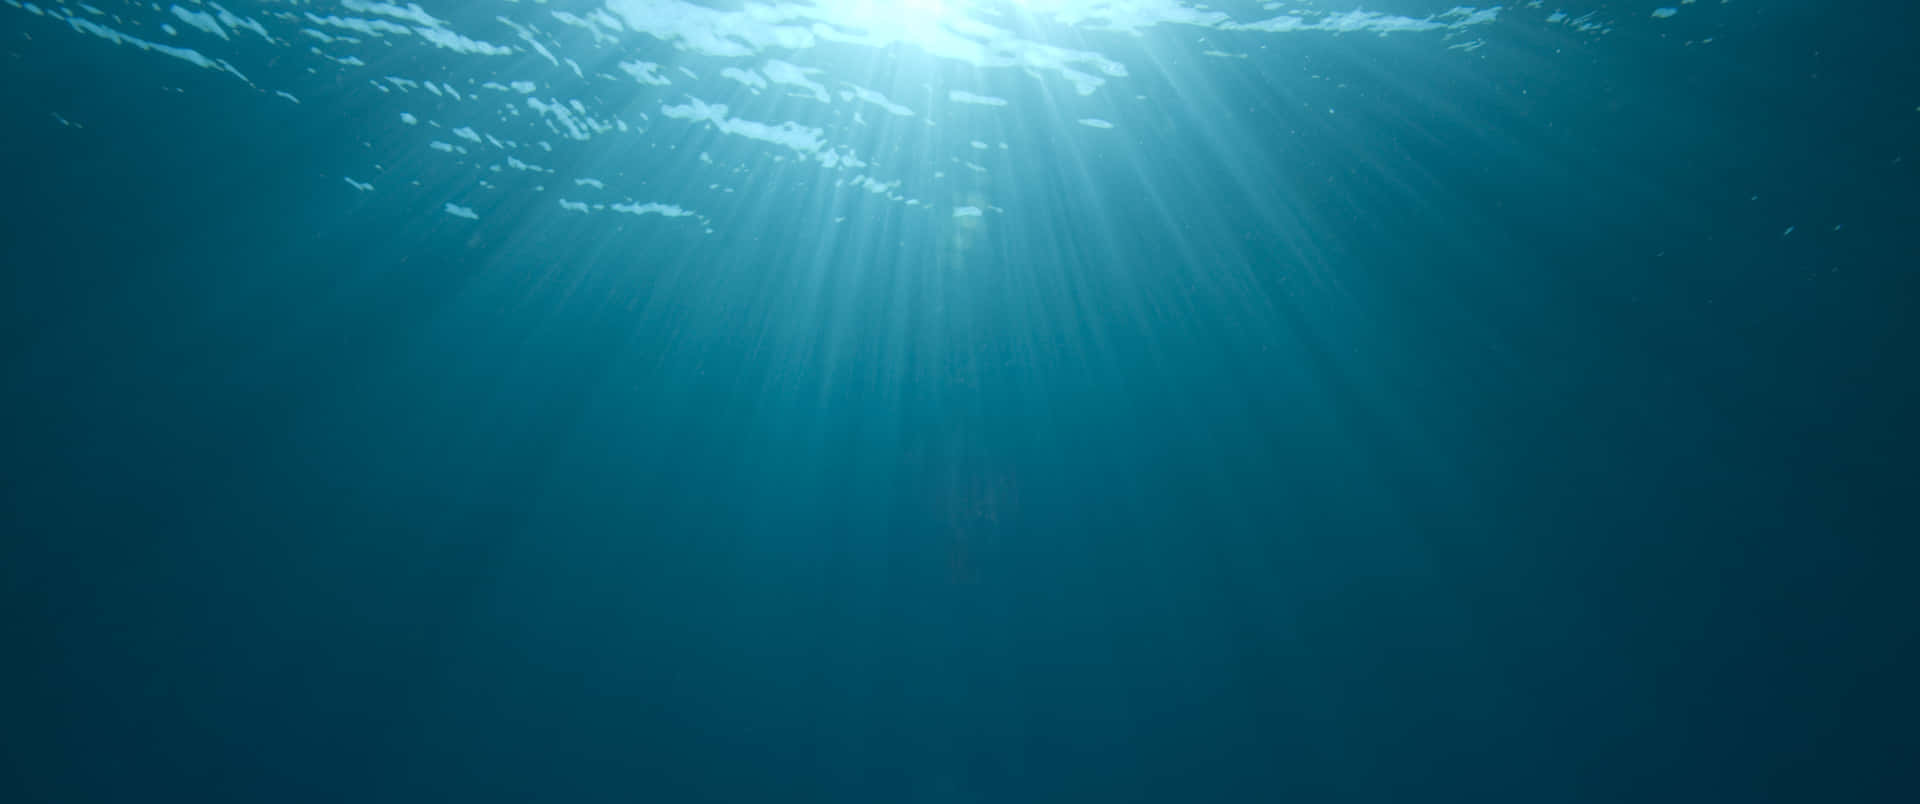 Sunlight Underwater Deep Blue Ocean Wallpaper